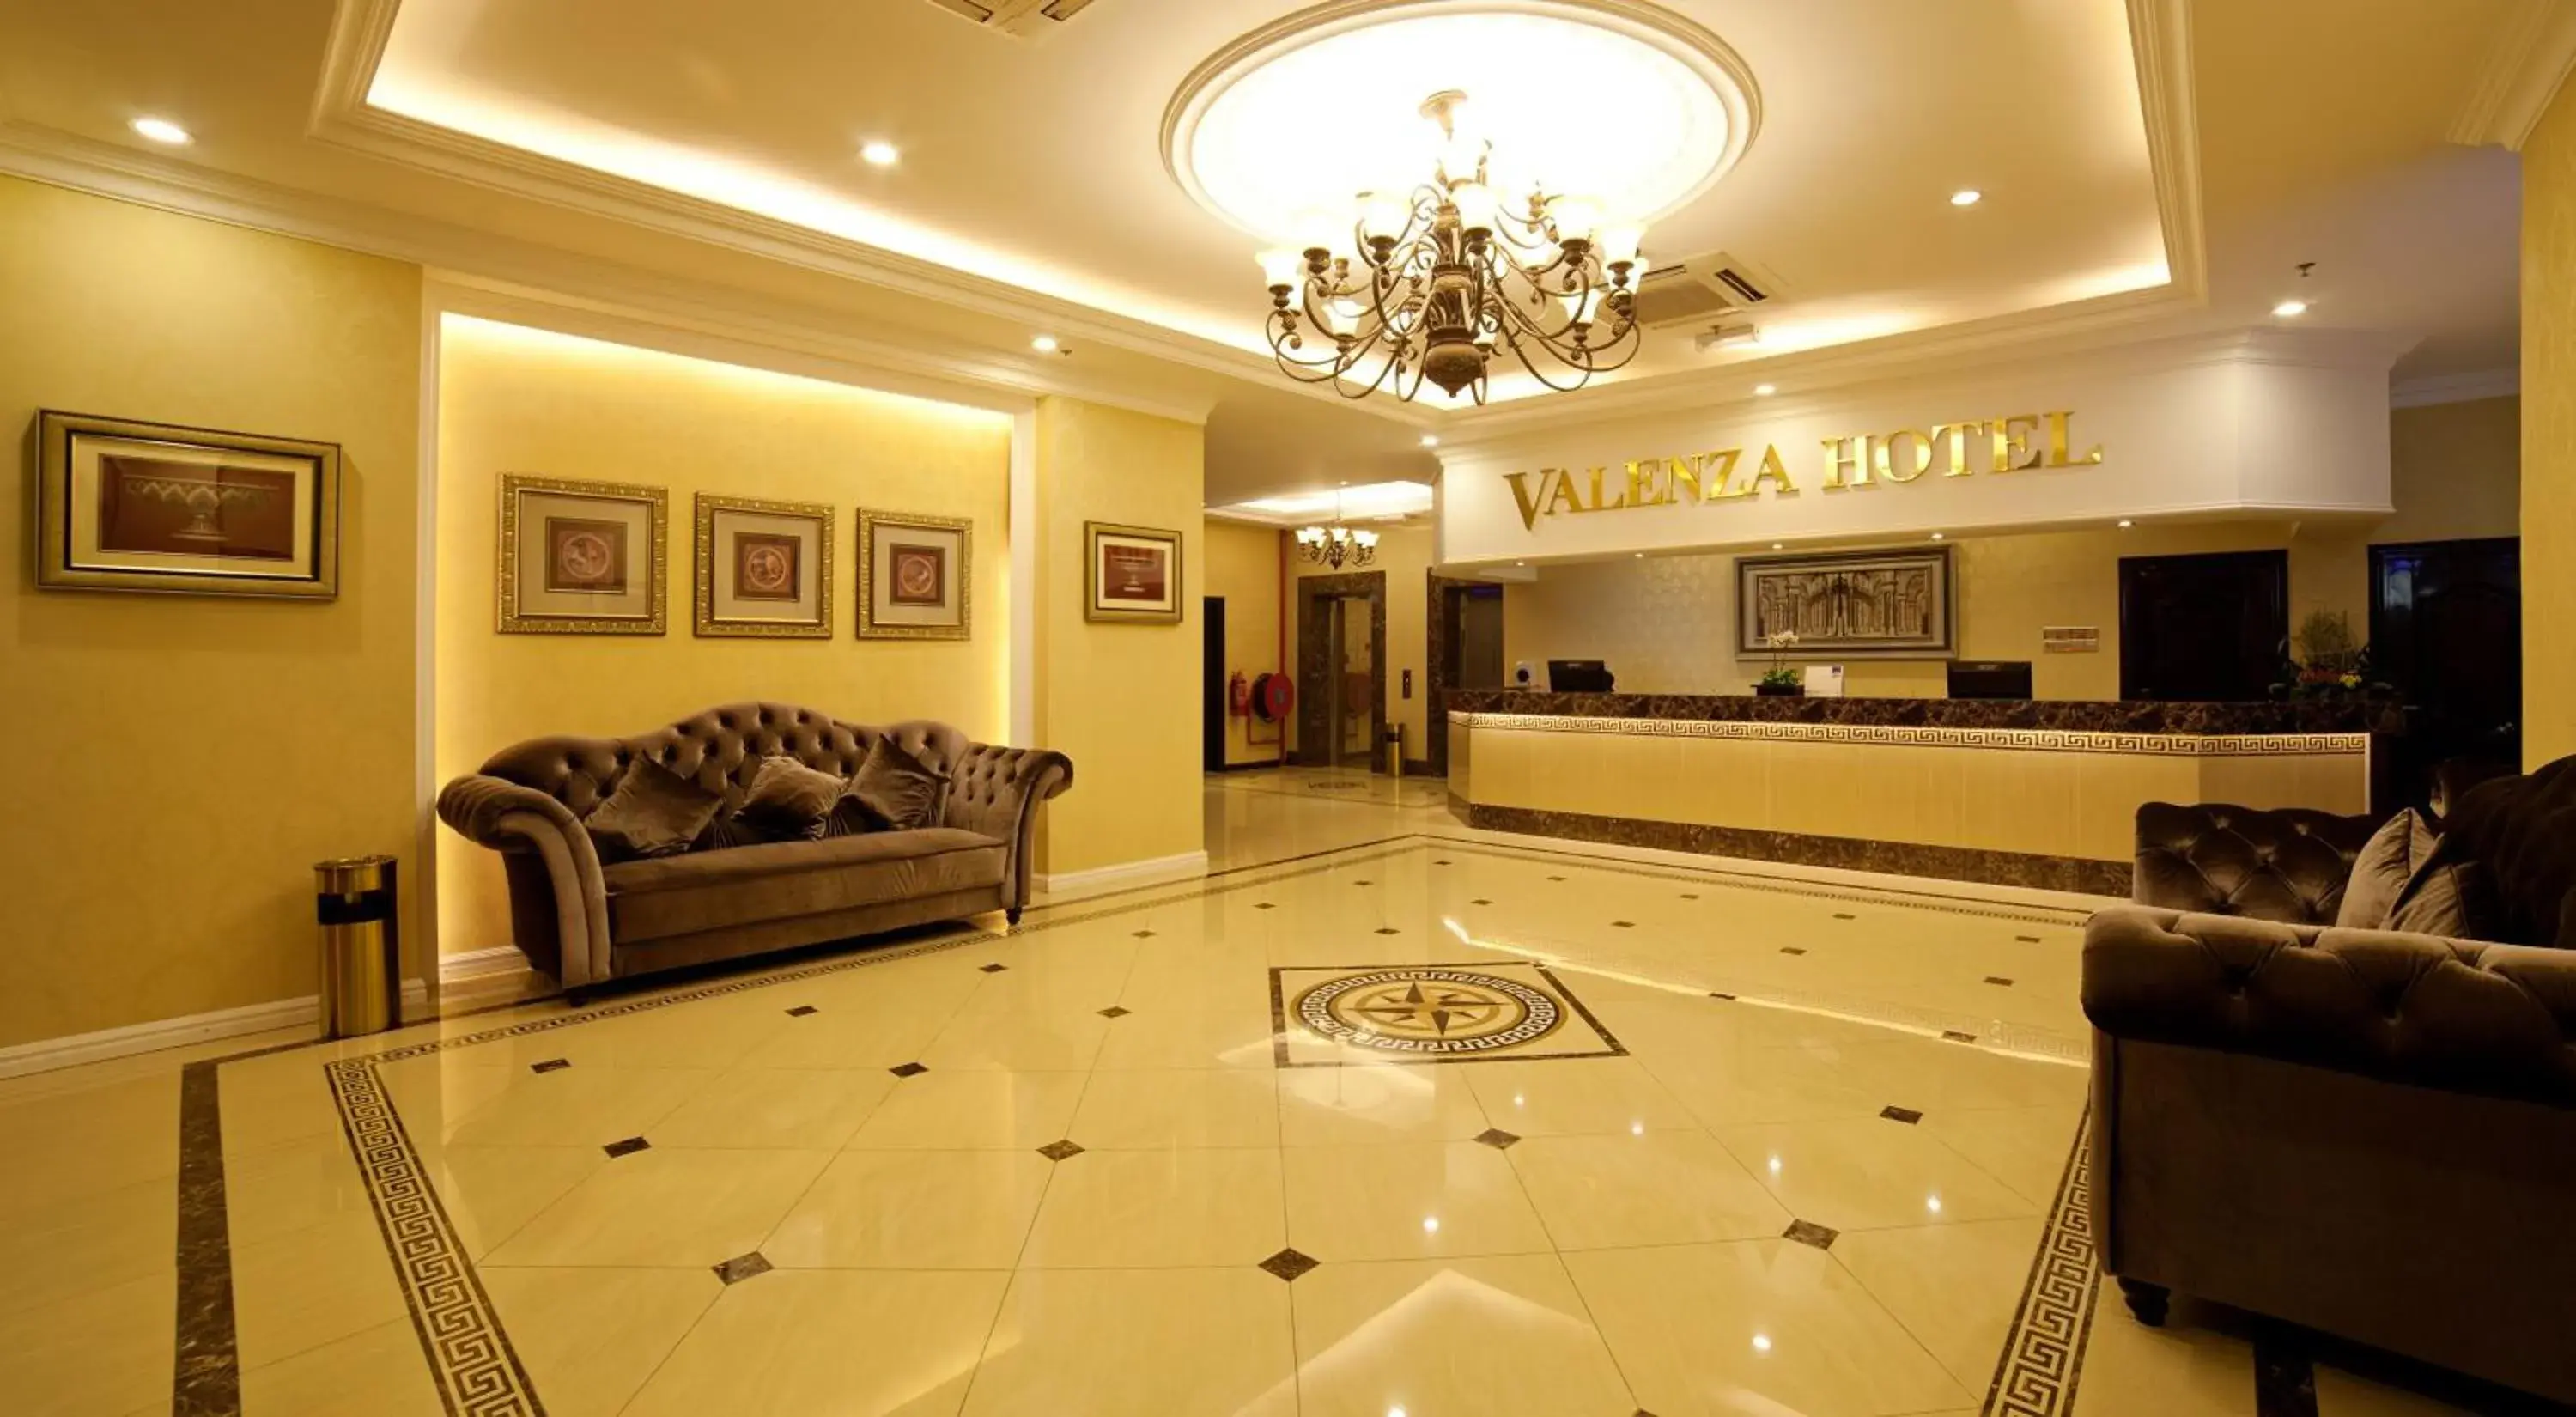 Lobby or reception, Lobby/Reception in Hotel Valenza